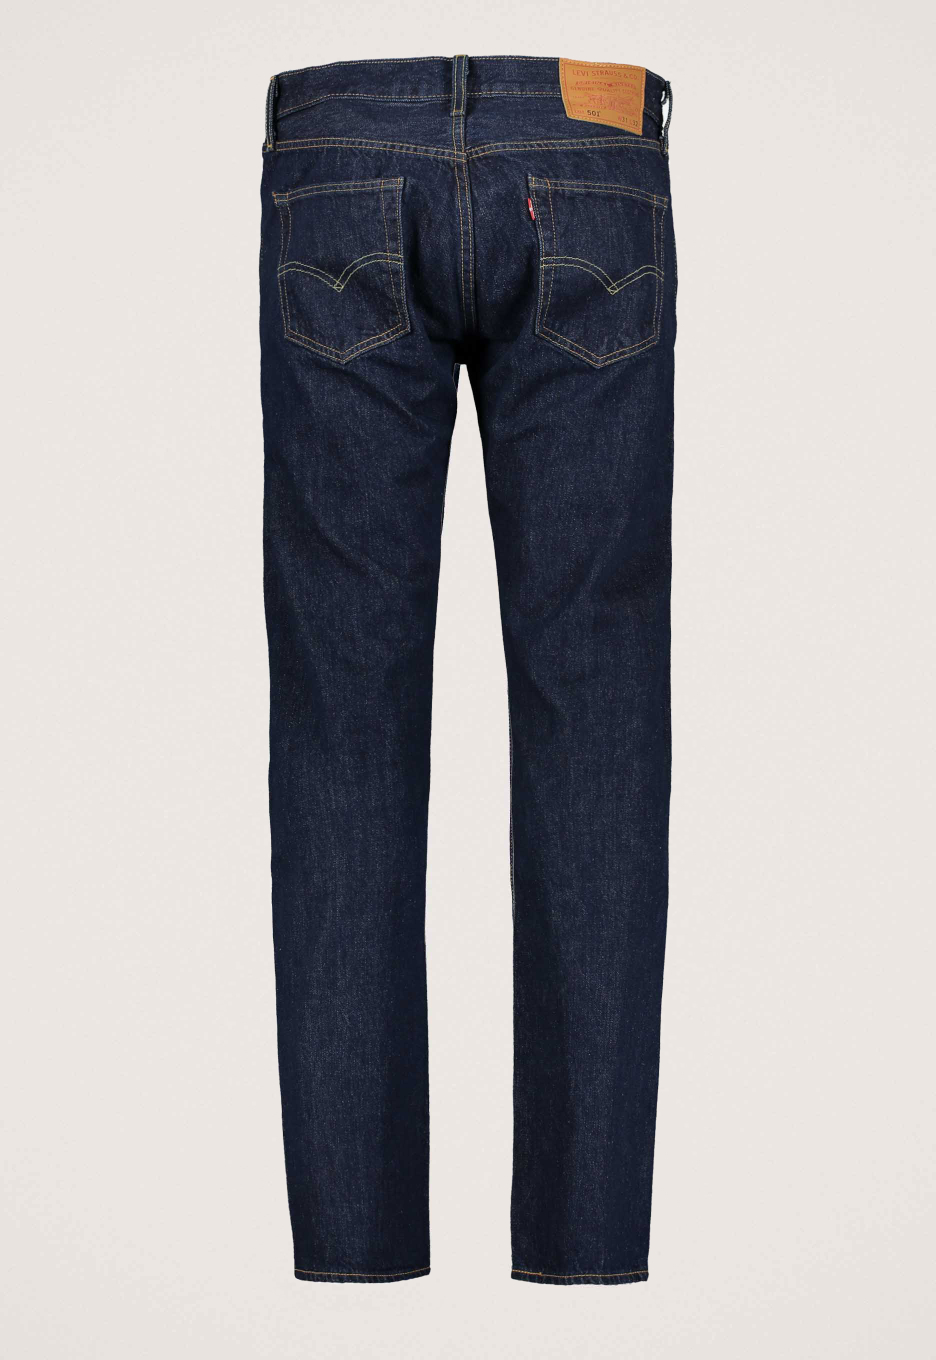 diepte Ontrouw aanwijzing Levi's 501 Original Straight Jeans Denim Onewash | Open32.nl